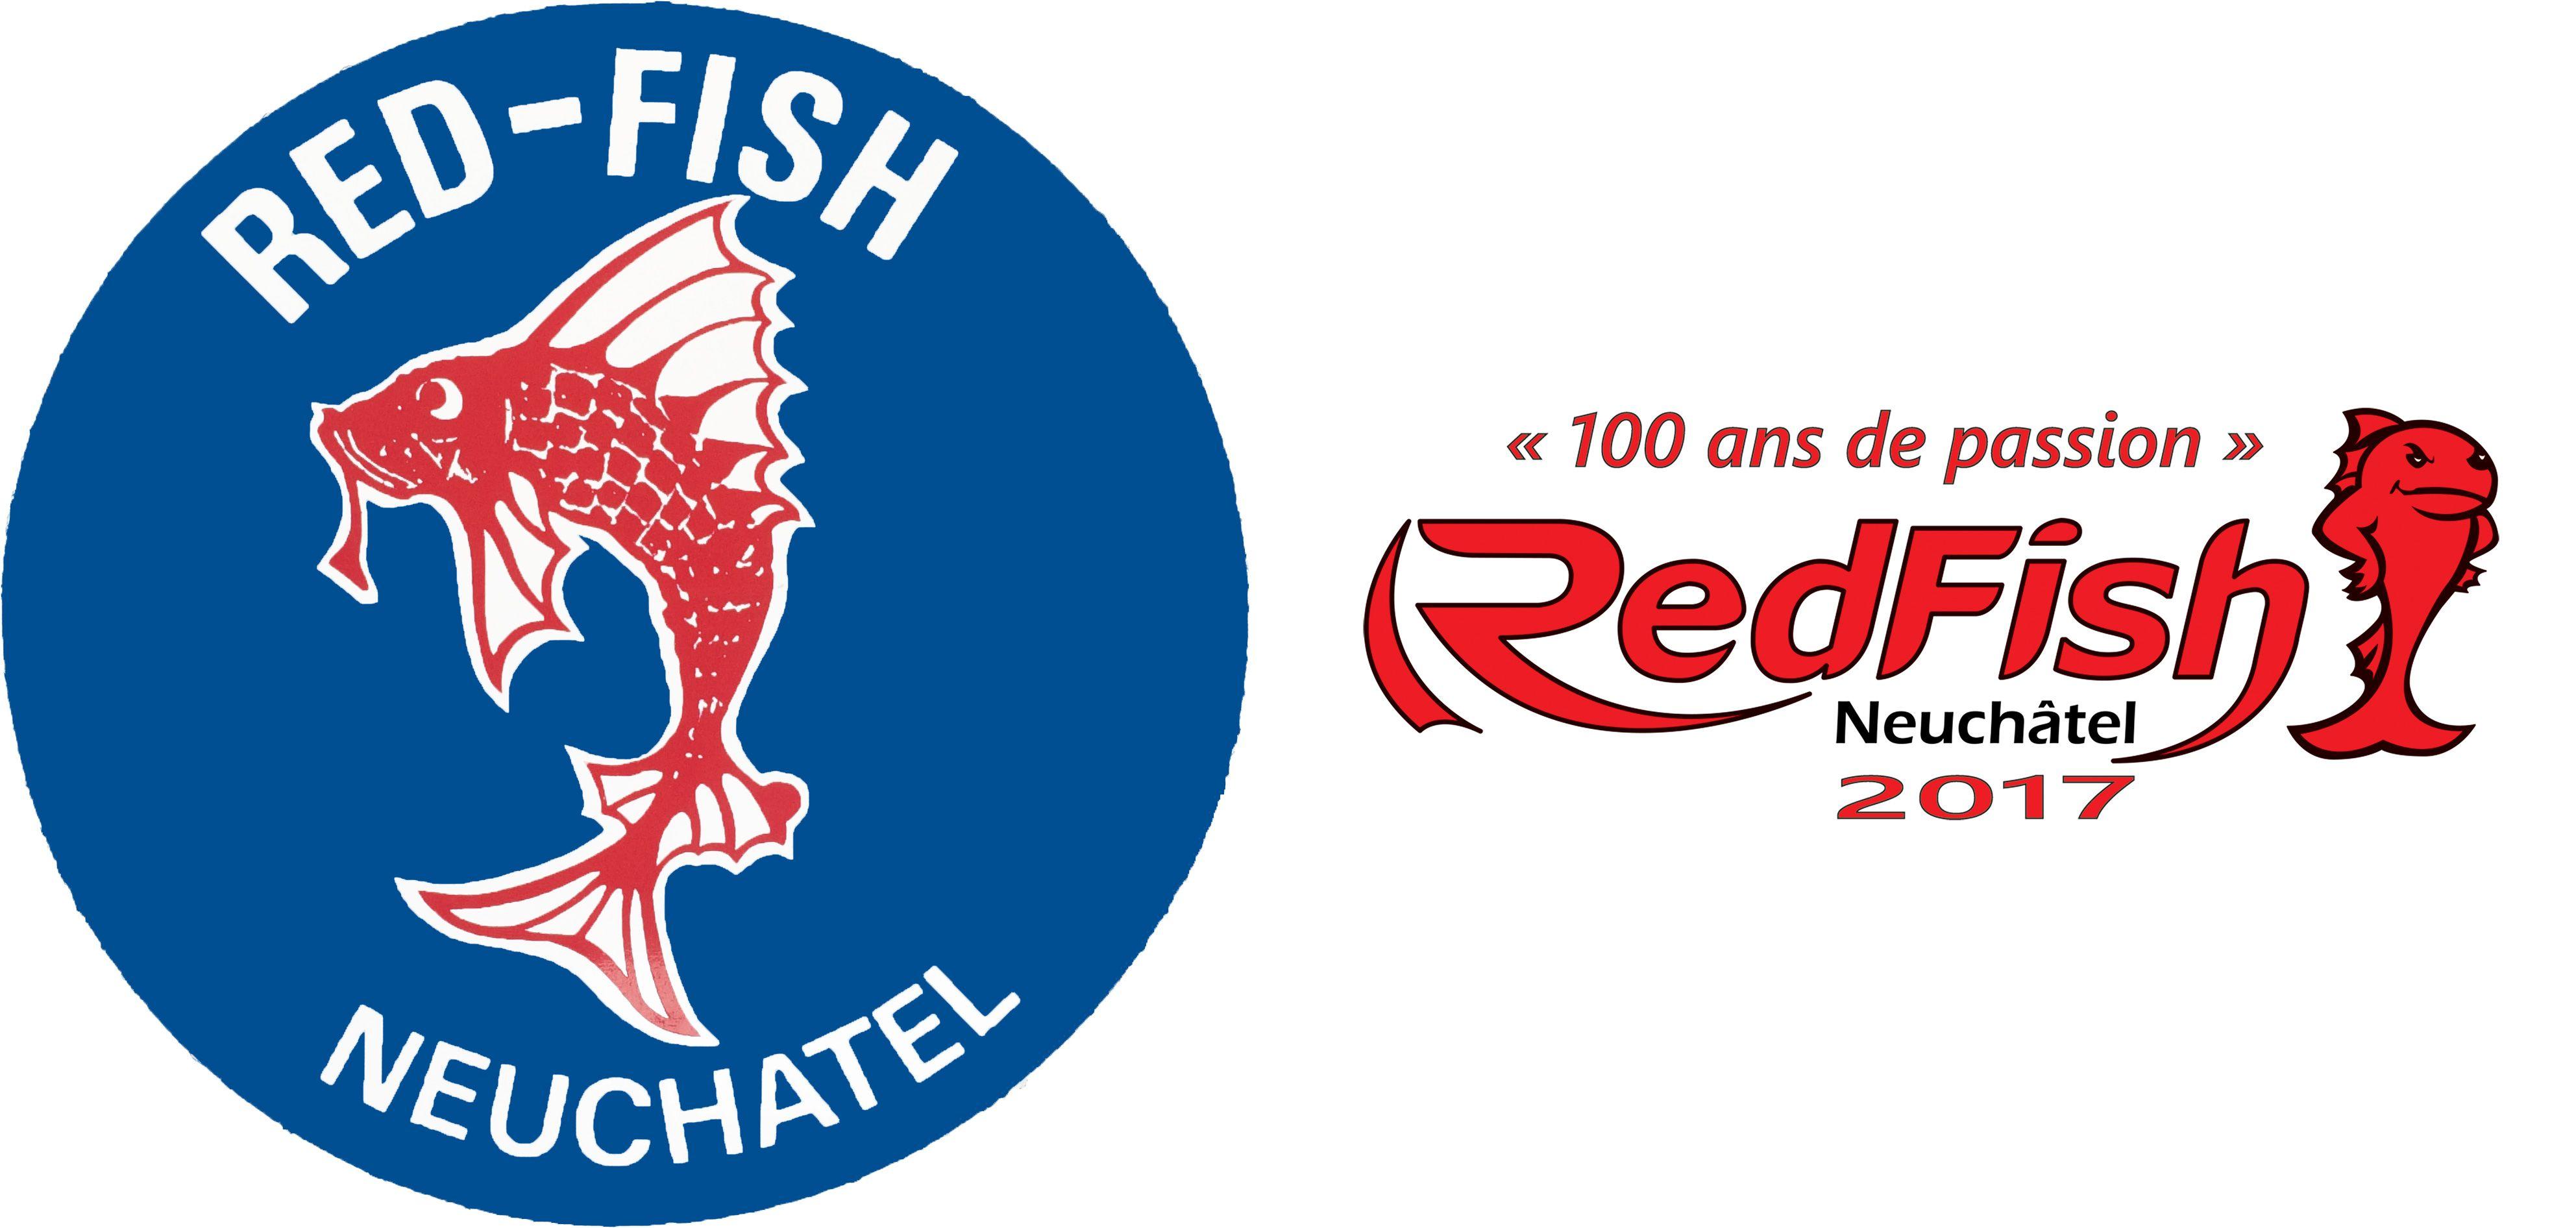 Red Fish Logo - File:Red-Fish-Logo-1917-2017.jpg - Wikimedia Commons